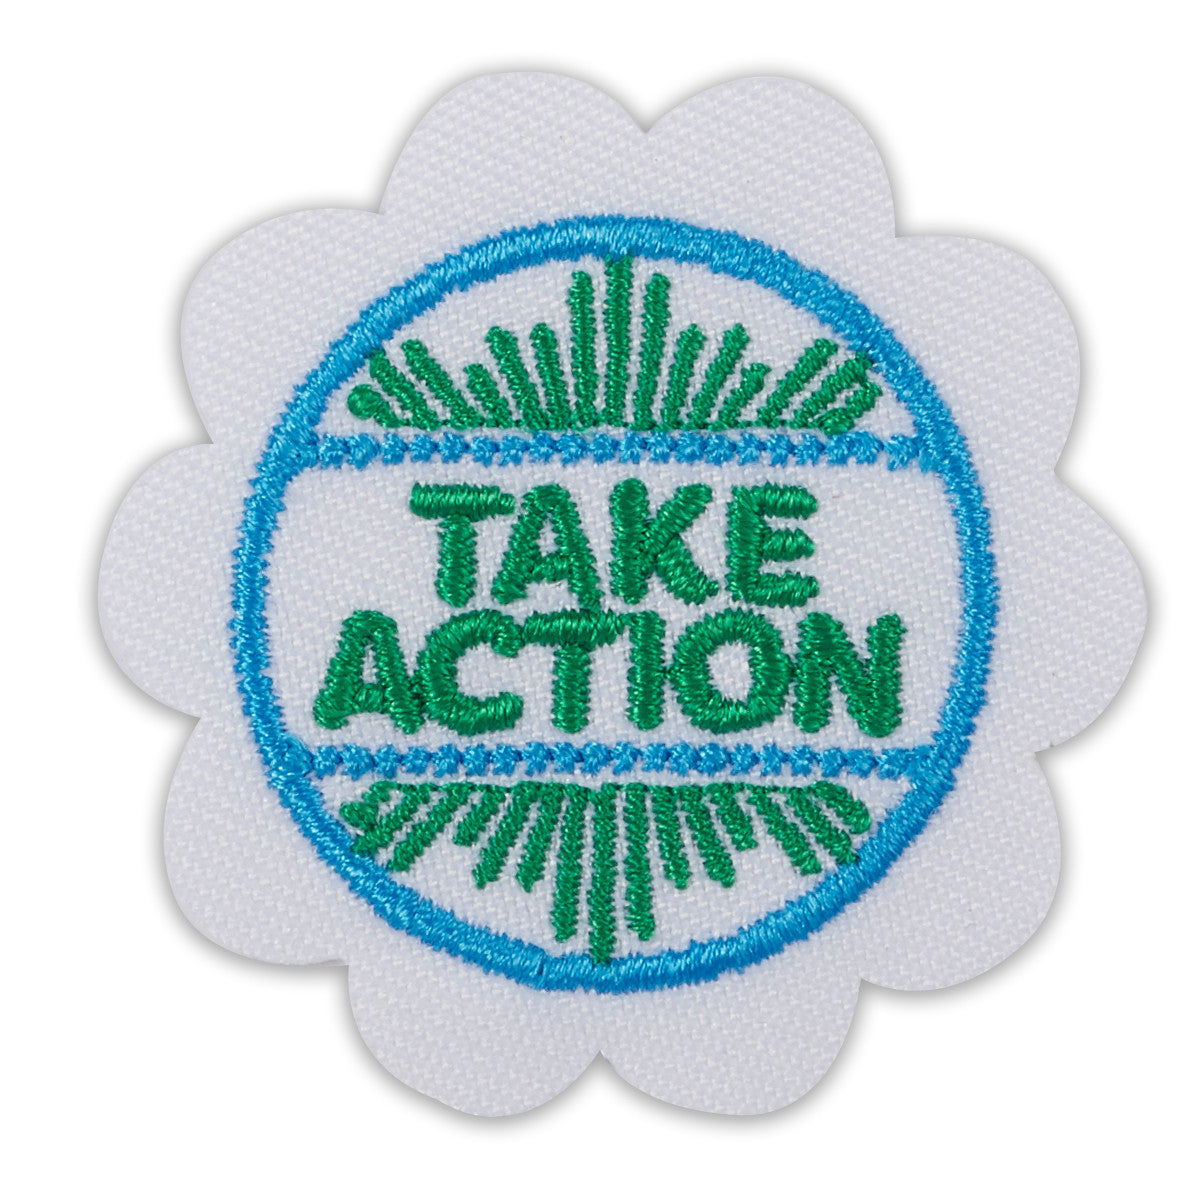 Girl Scouts Daisy Take Action Award Badge - Basics Clothing Store